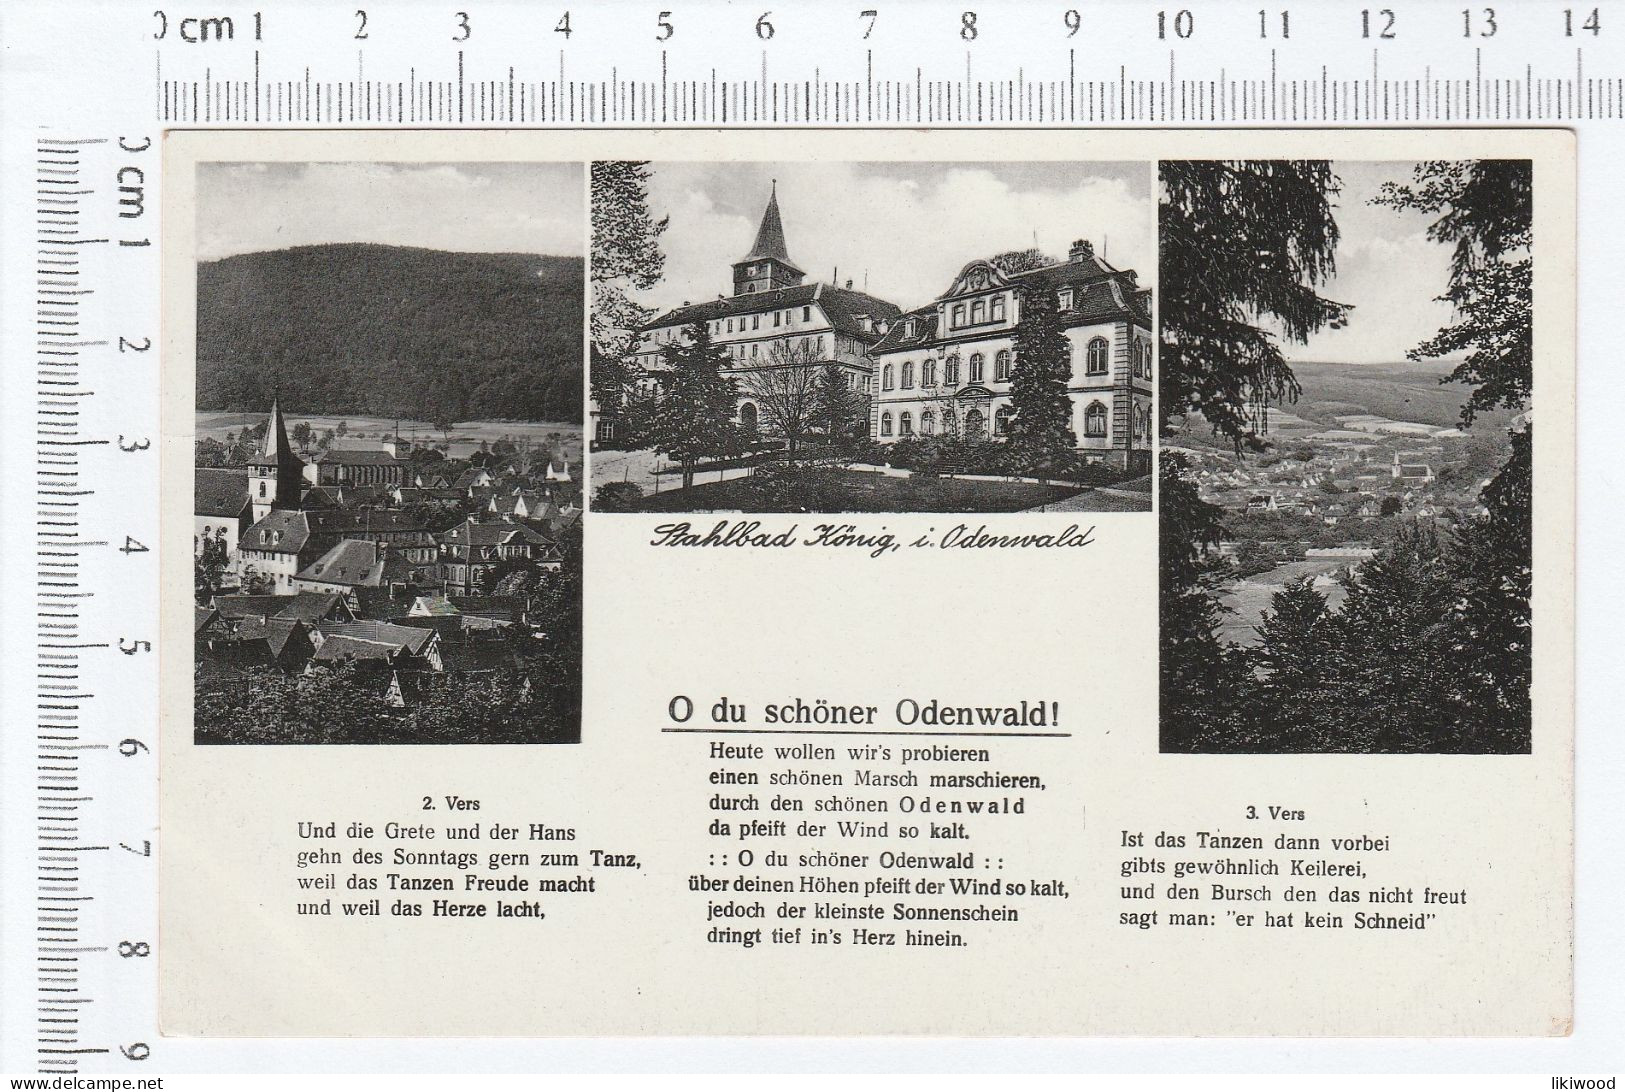 Stahlbad König Im Odenwald - 1940 - Bad Koenig